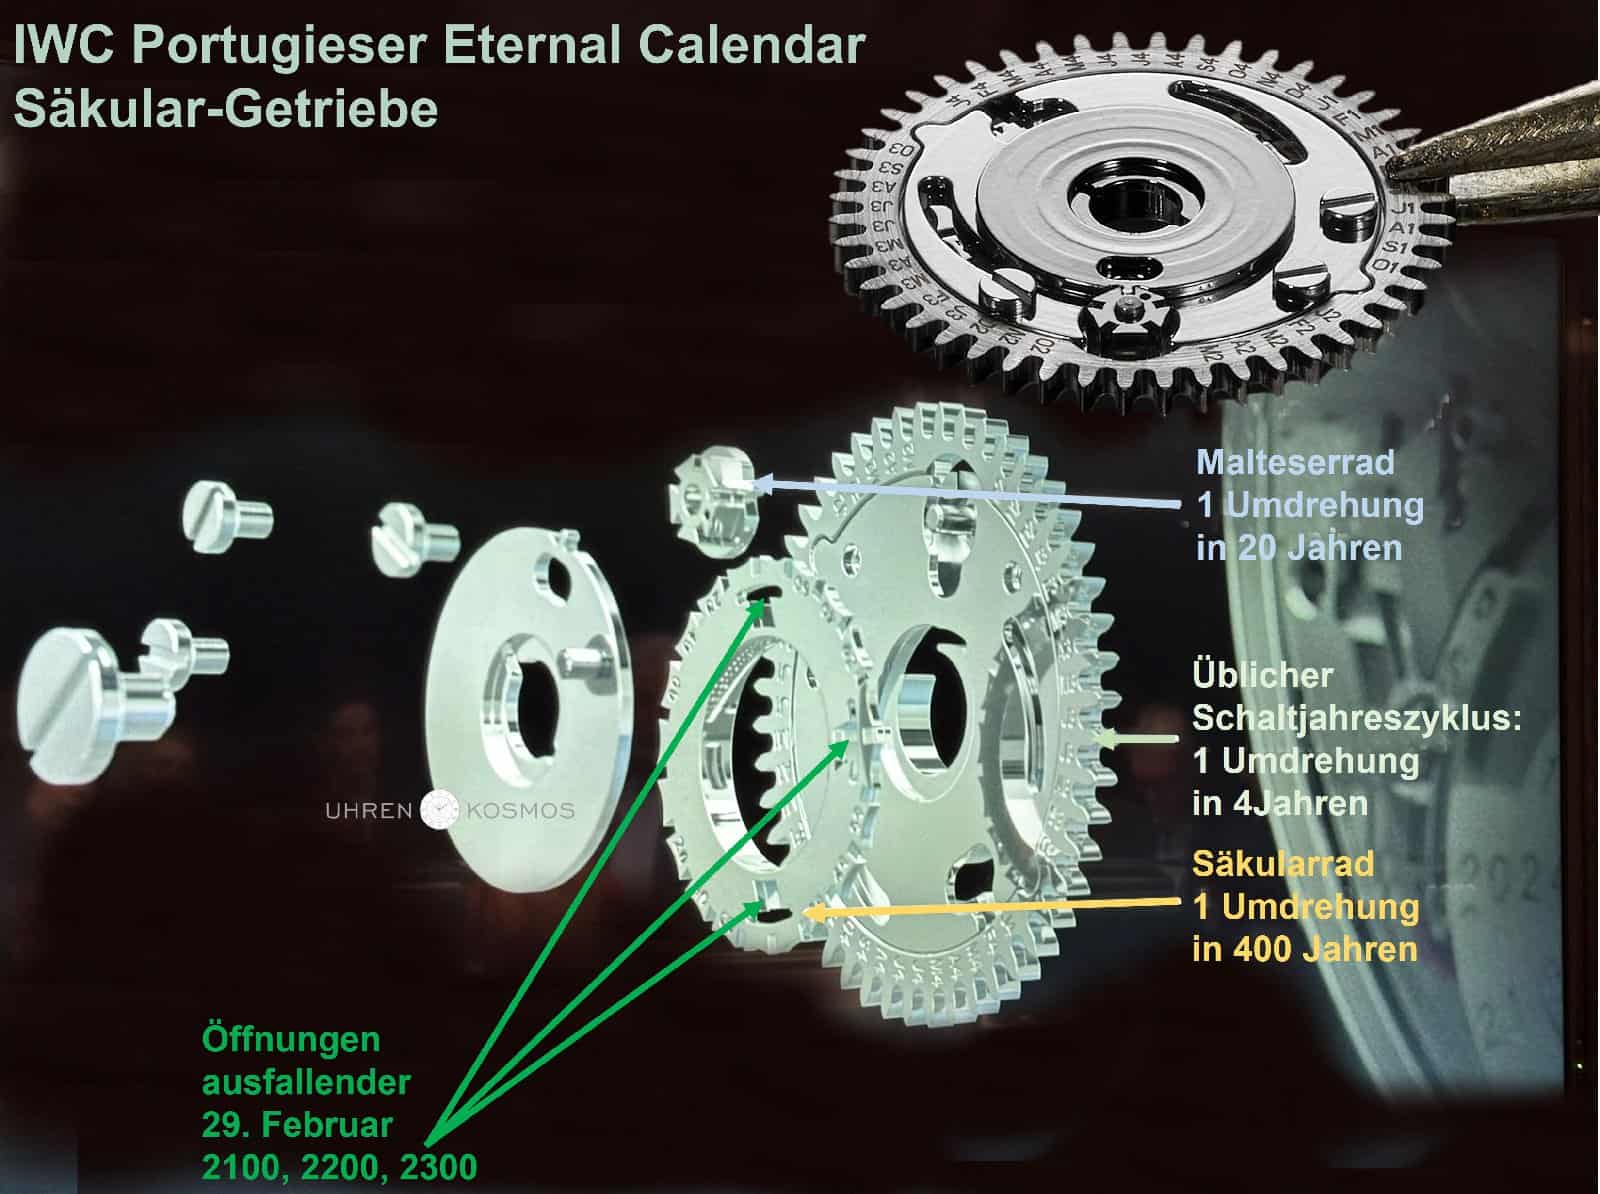 IWC Portugieser Eternal Calendar Säkular-Mechanismus Explosion 2 (C) Uhrenkosmos